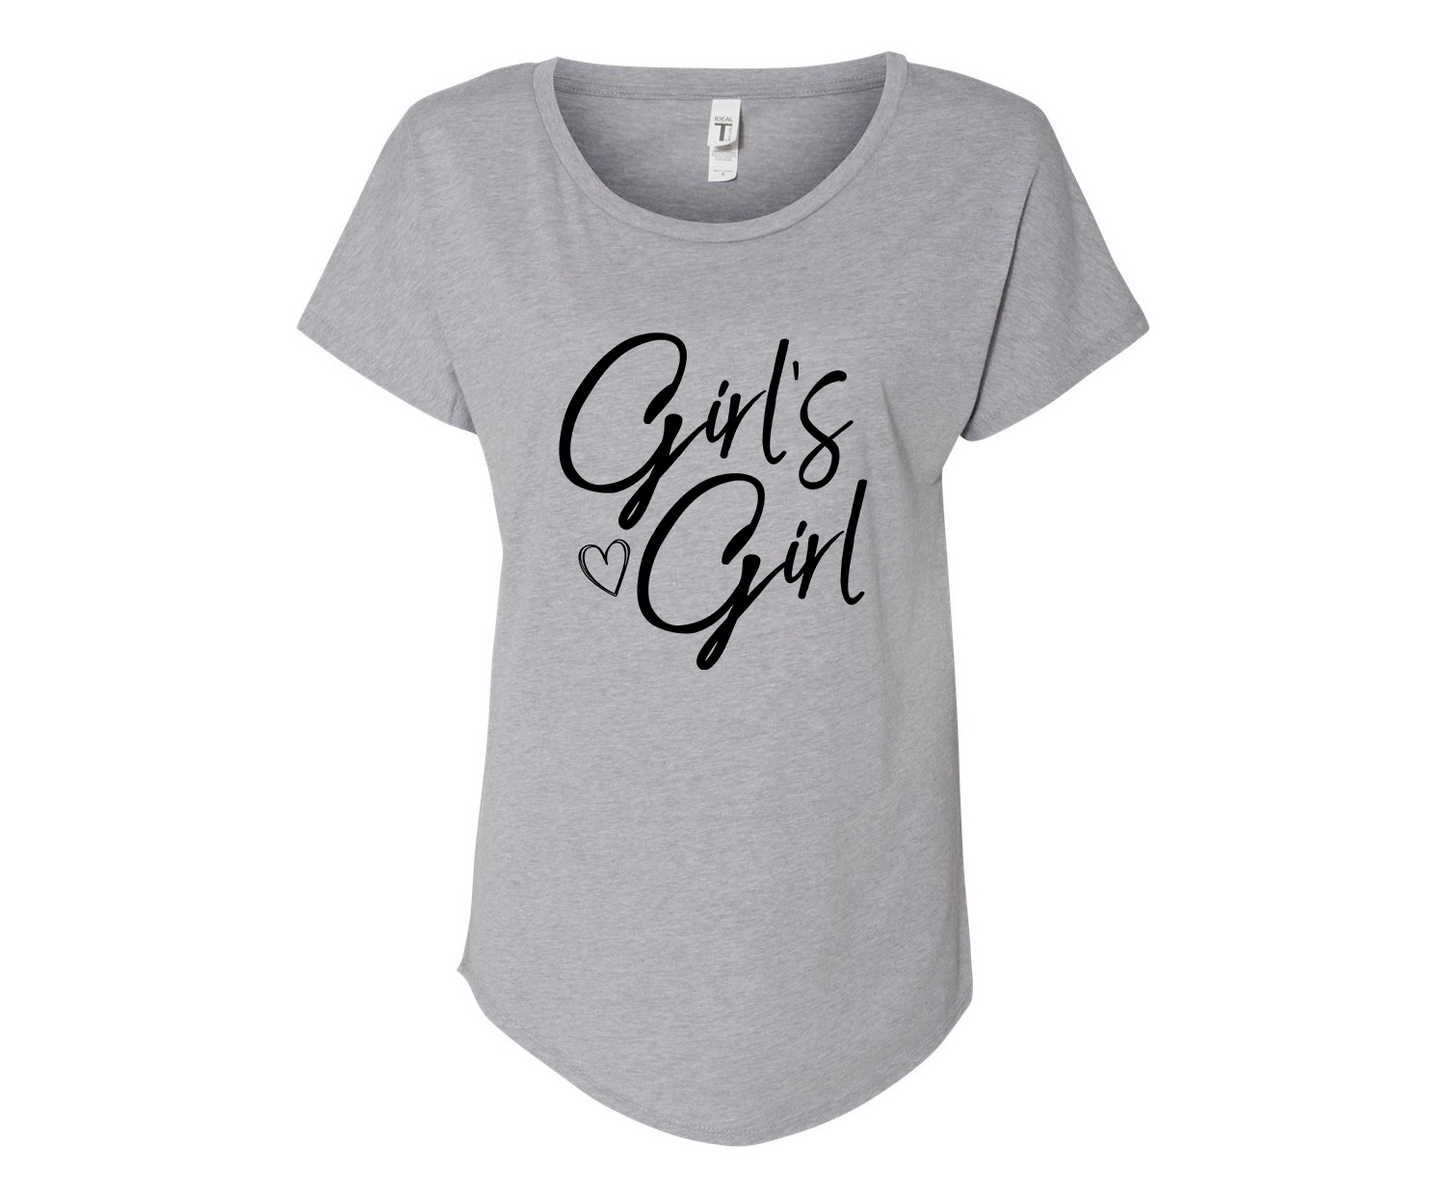 Girl's Girl Ladies Tee Shirt - In Grey & White